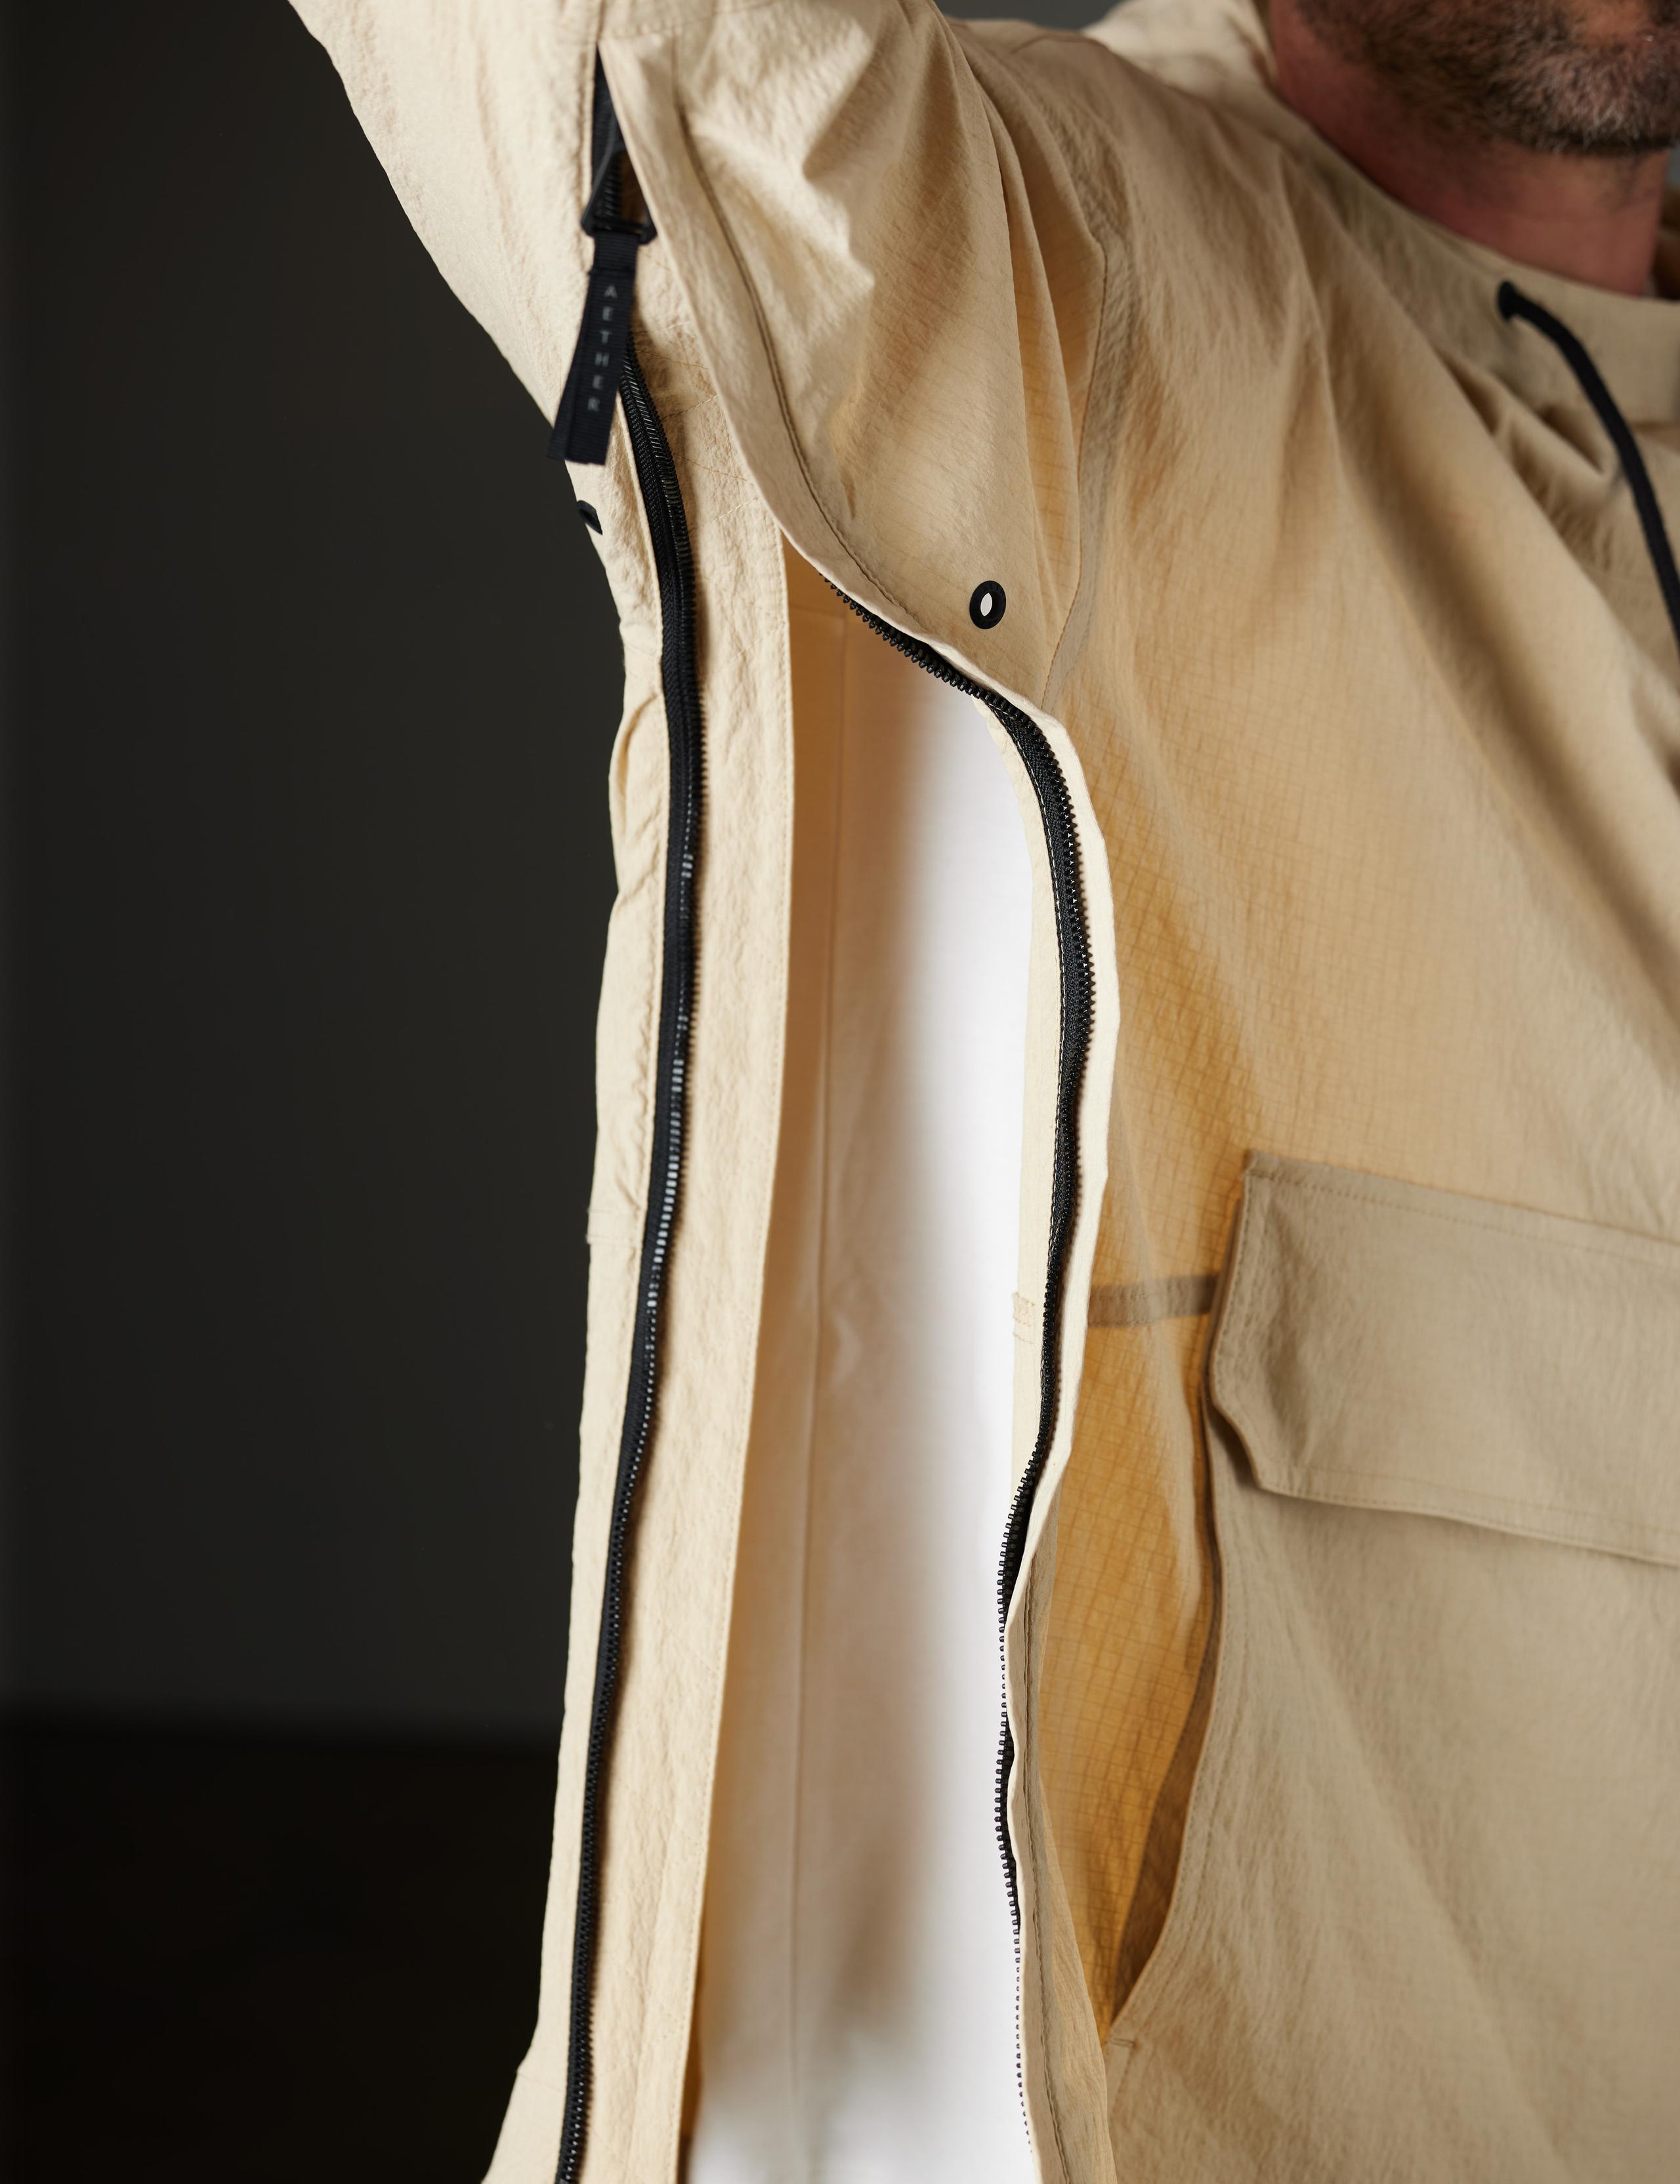 Studio closeup of underarm side-seam zippers